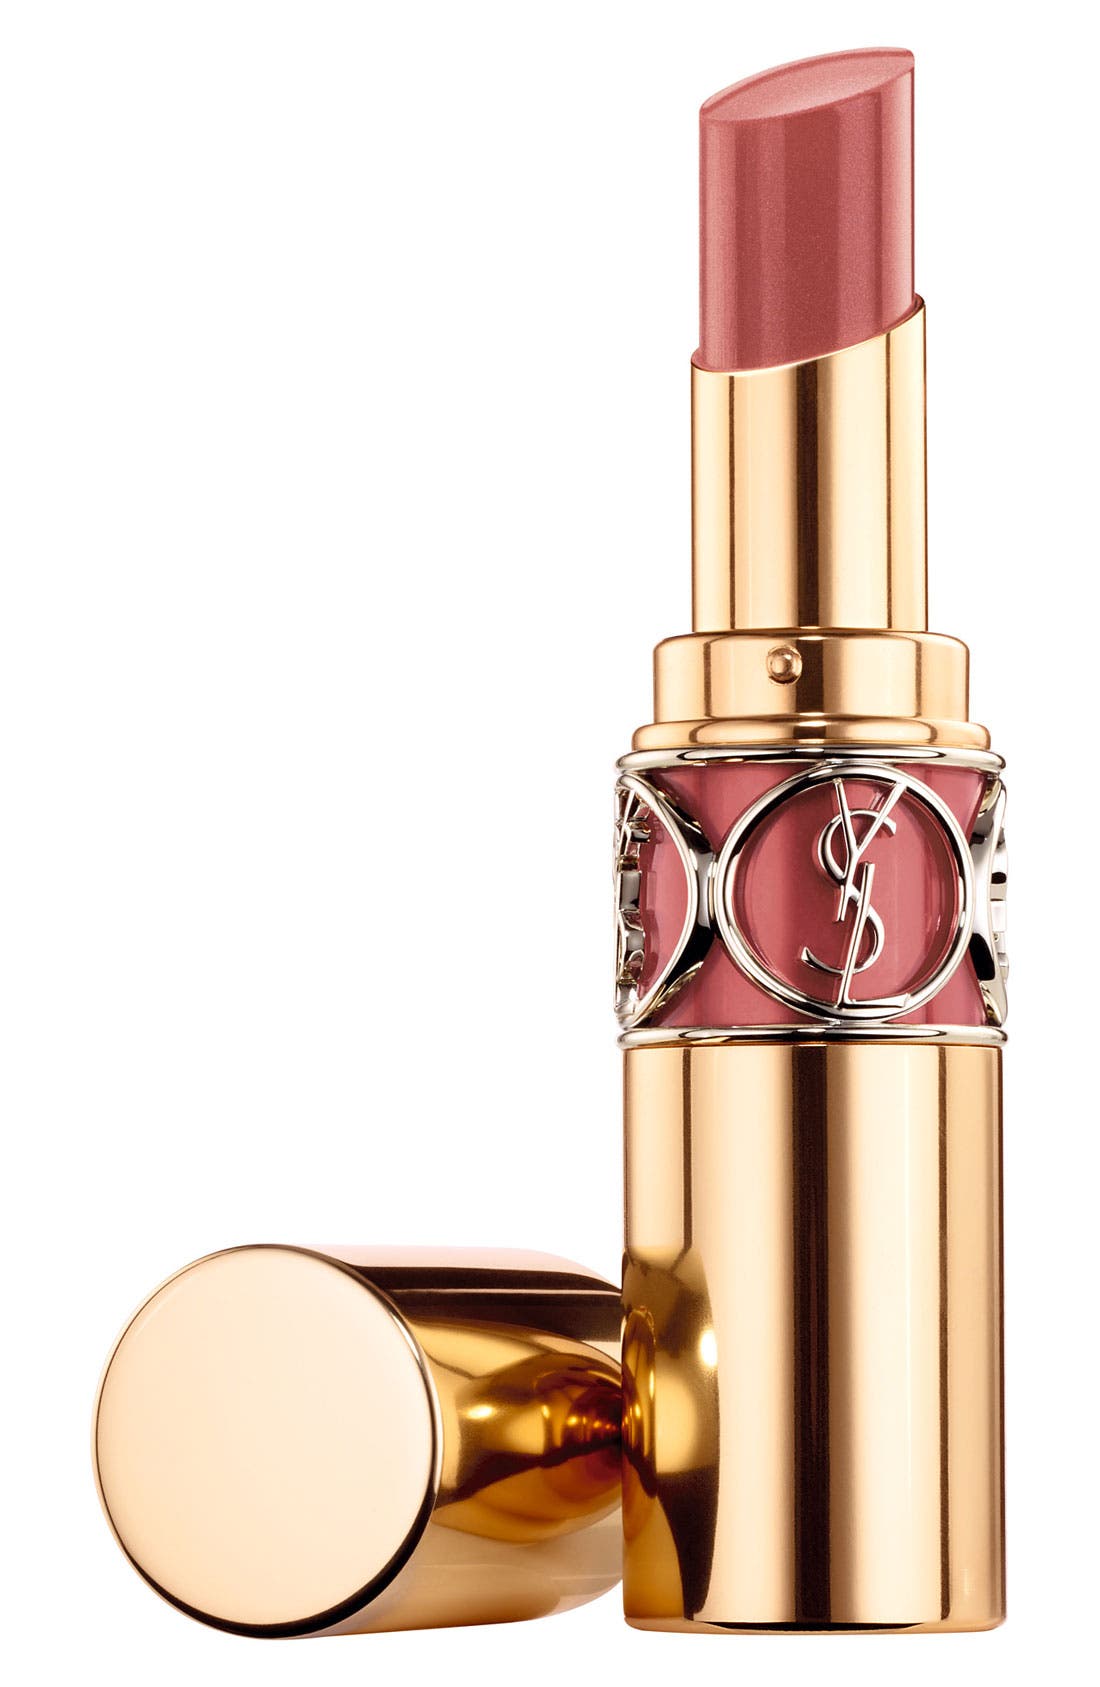 Yves Saint Laurent Rouge Volupte Shine Oil-in-Stick Lipstick Balm in 09 Nude Sheer